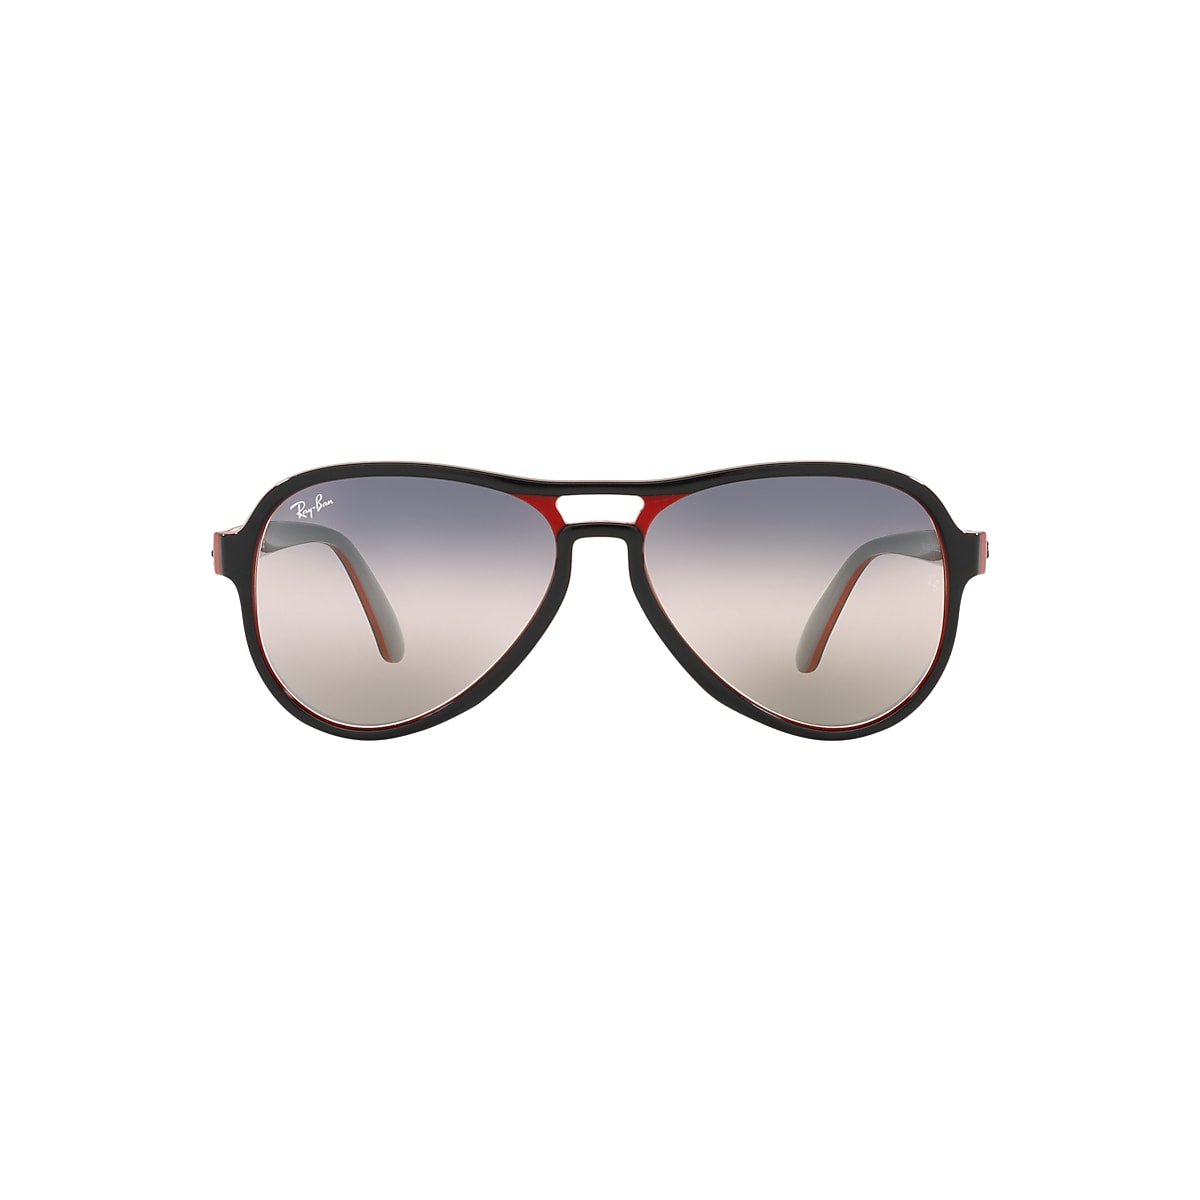 Vagabond Bi-gradient Sunglasses in Black and Pink/Blue | Ray-Ban®